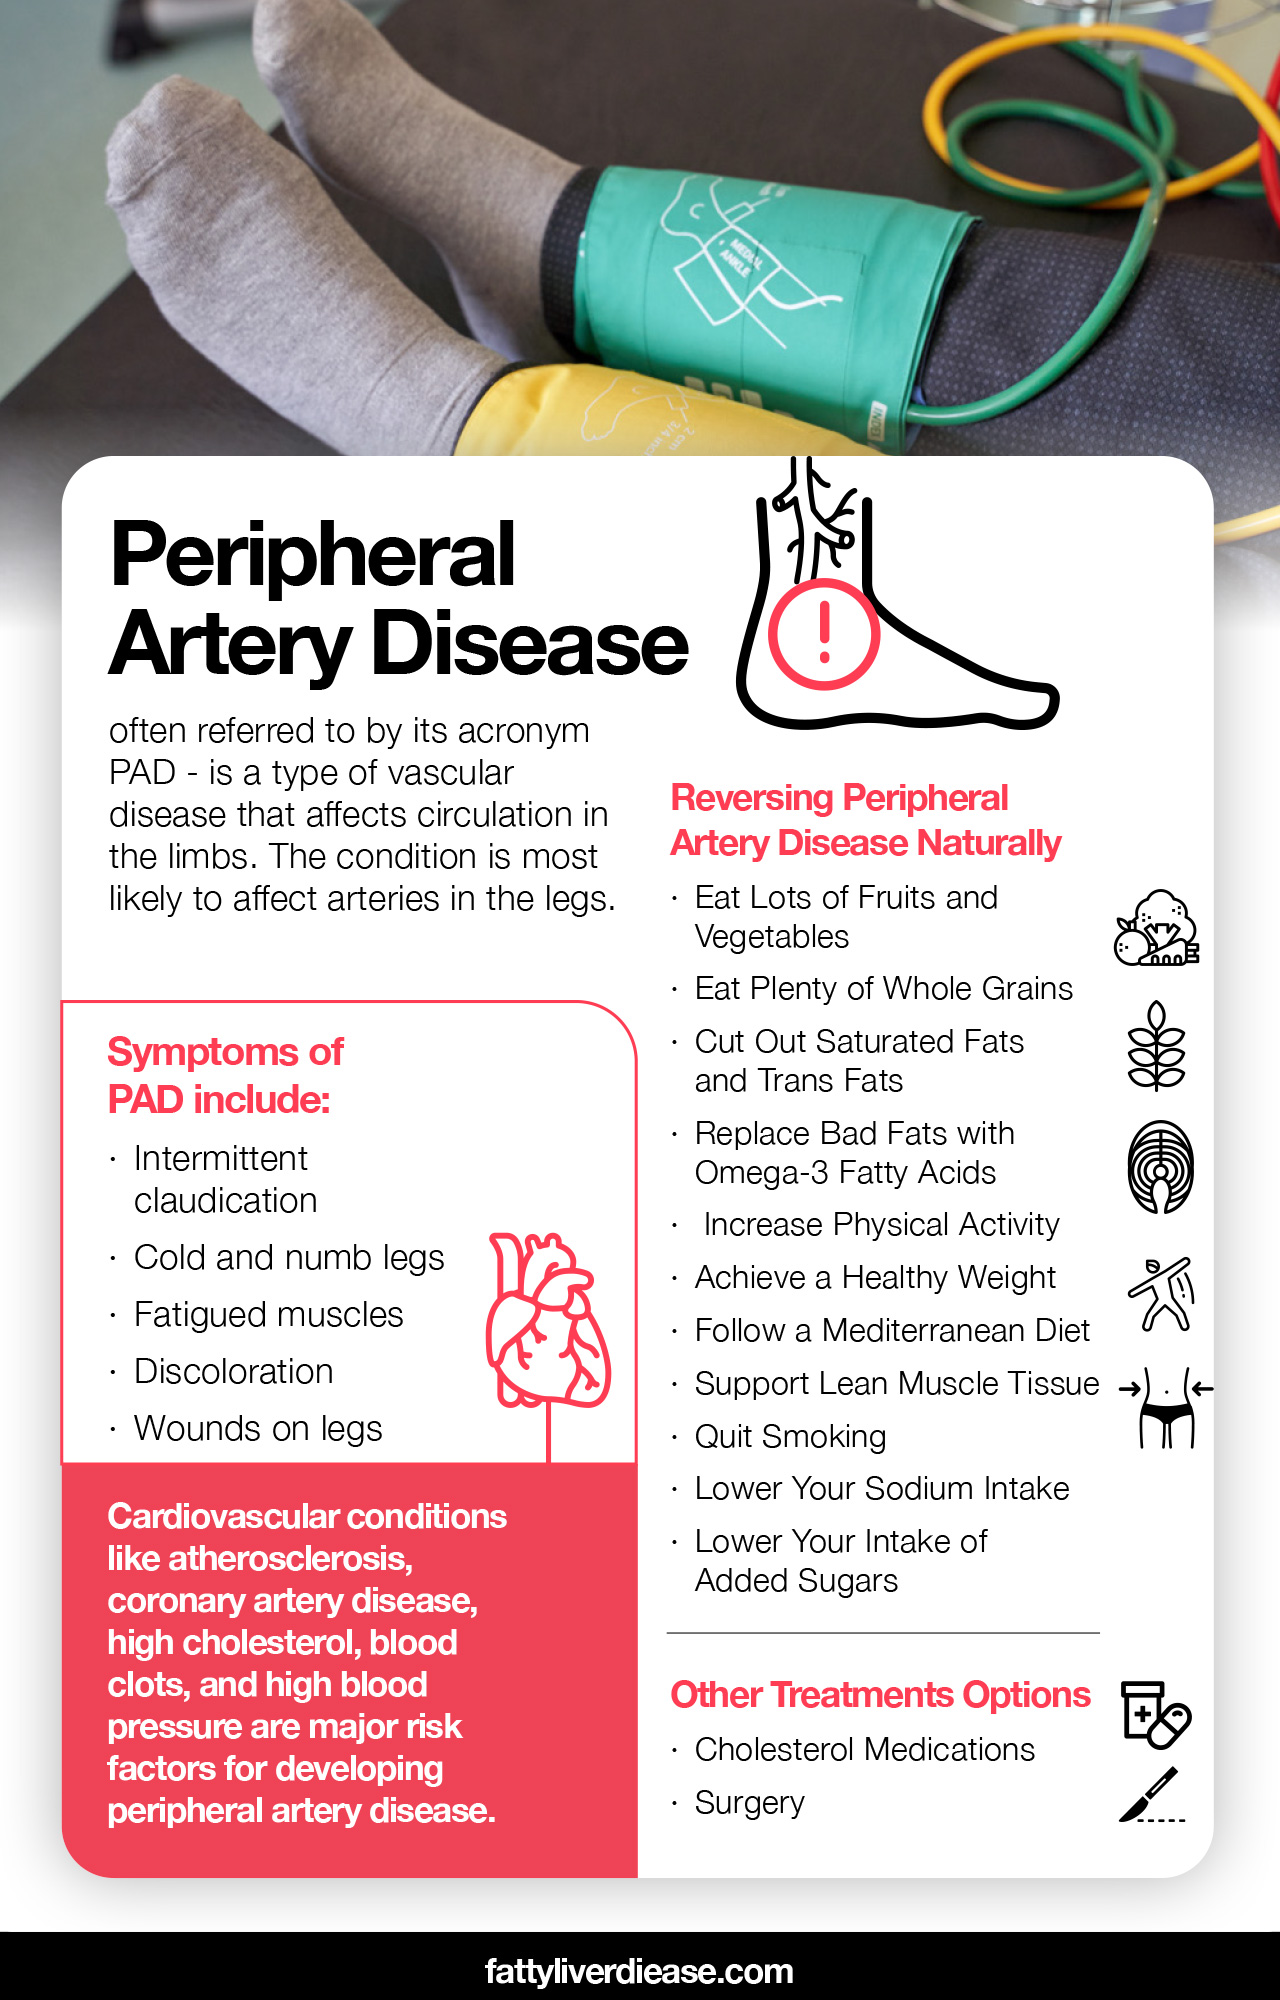 Reversing Peripheral Artery Disease Naturally